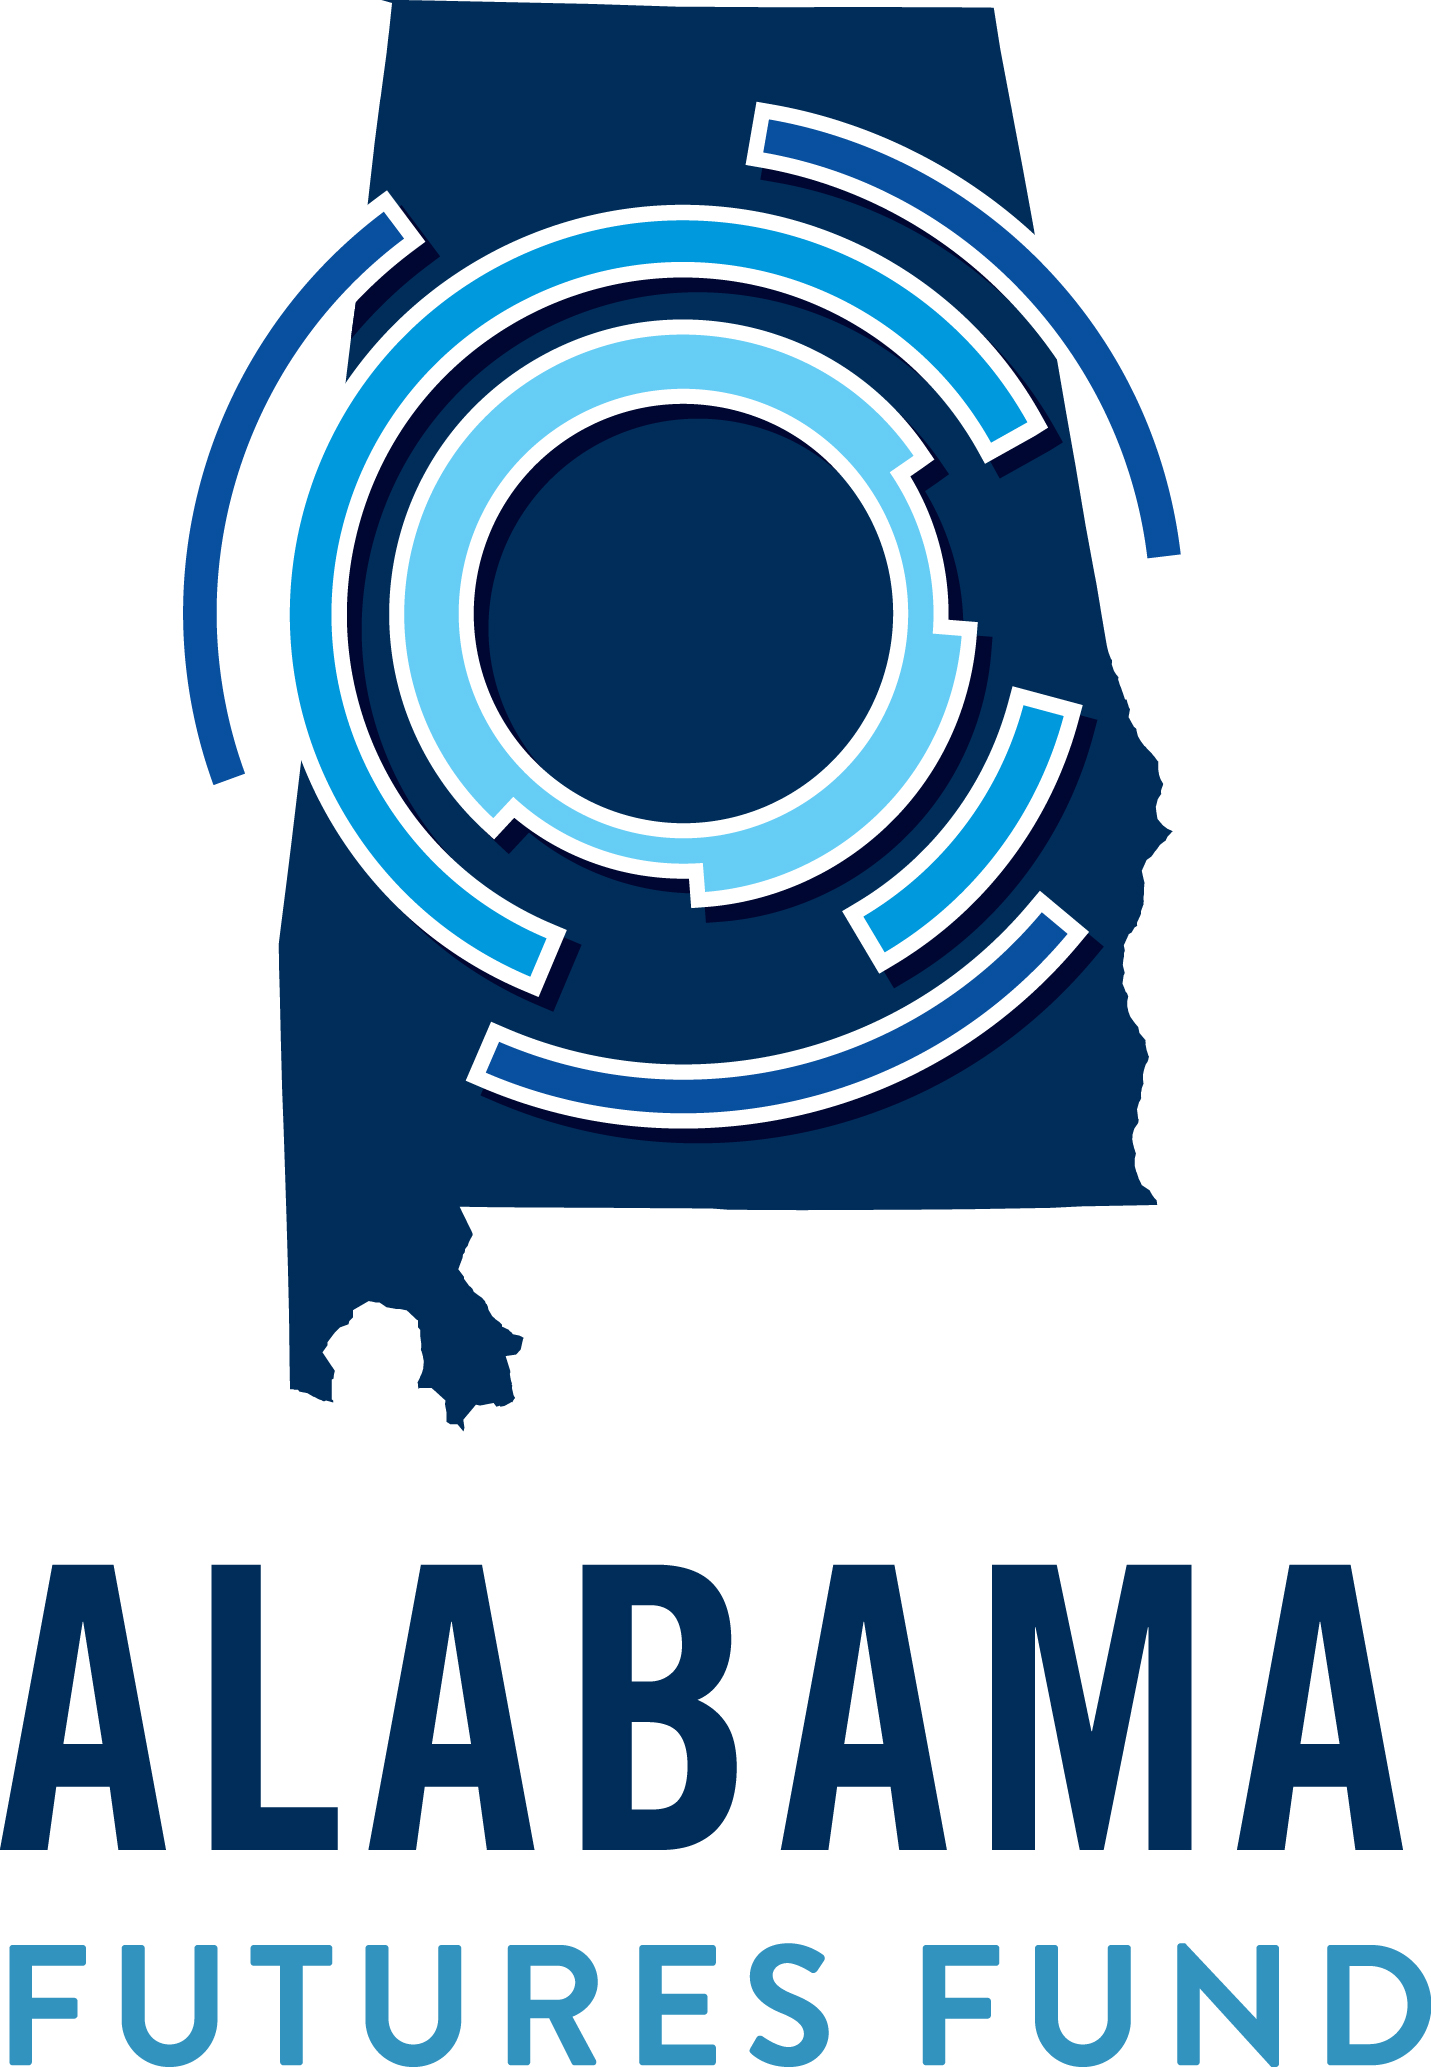 Alabama Futures Fund (Vertical) FA copy.jpg